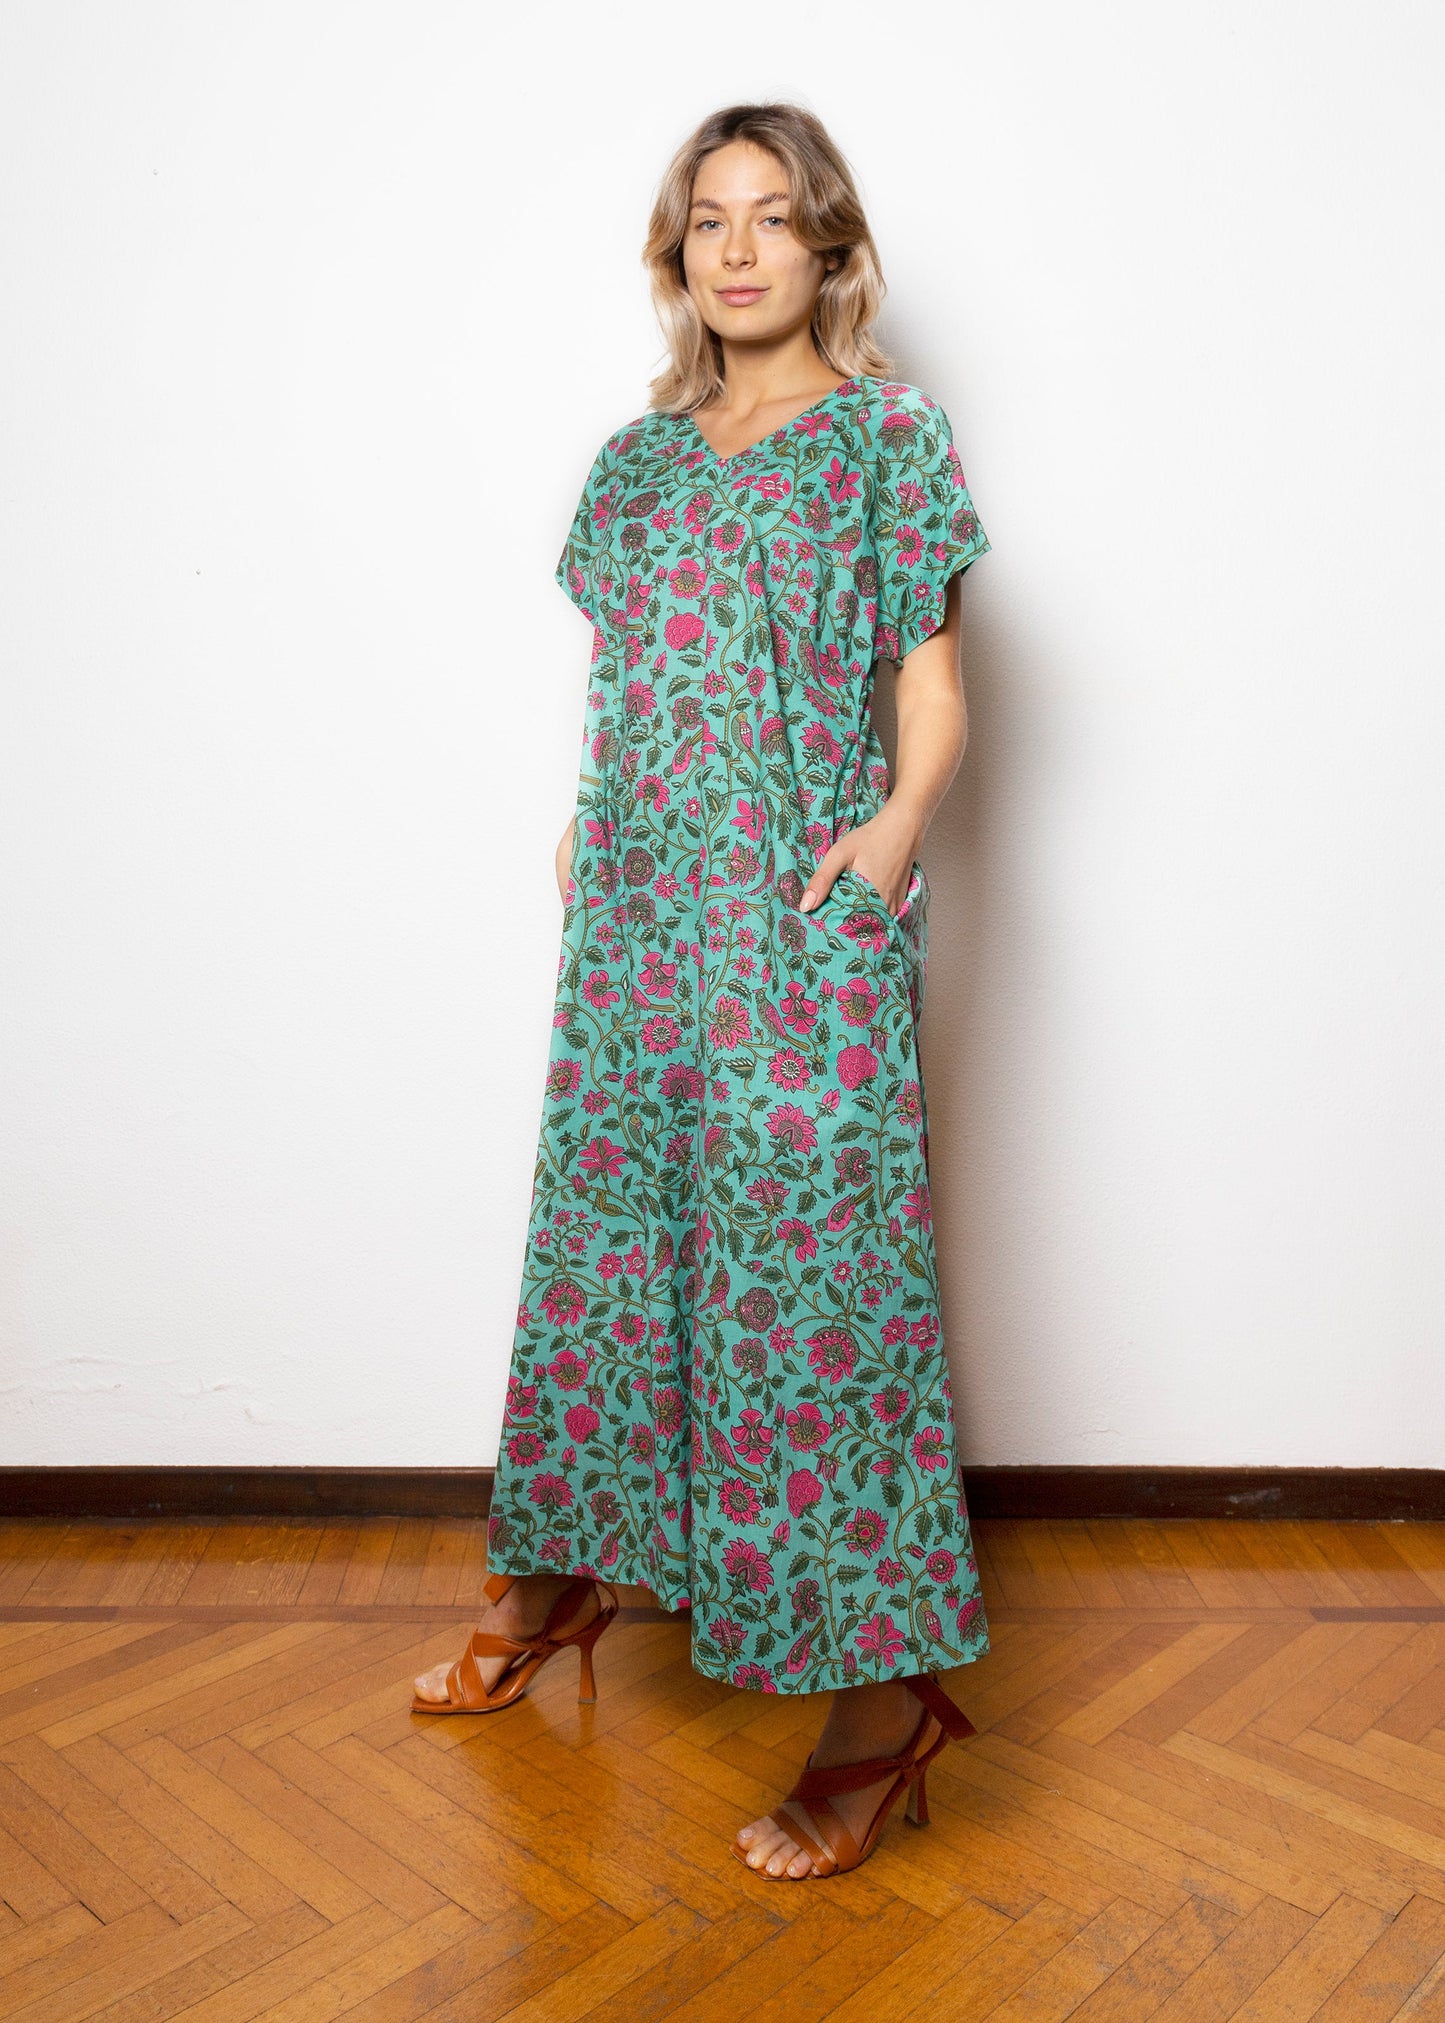 Long light blue cotton dress with pink floral print - BACHRA002